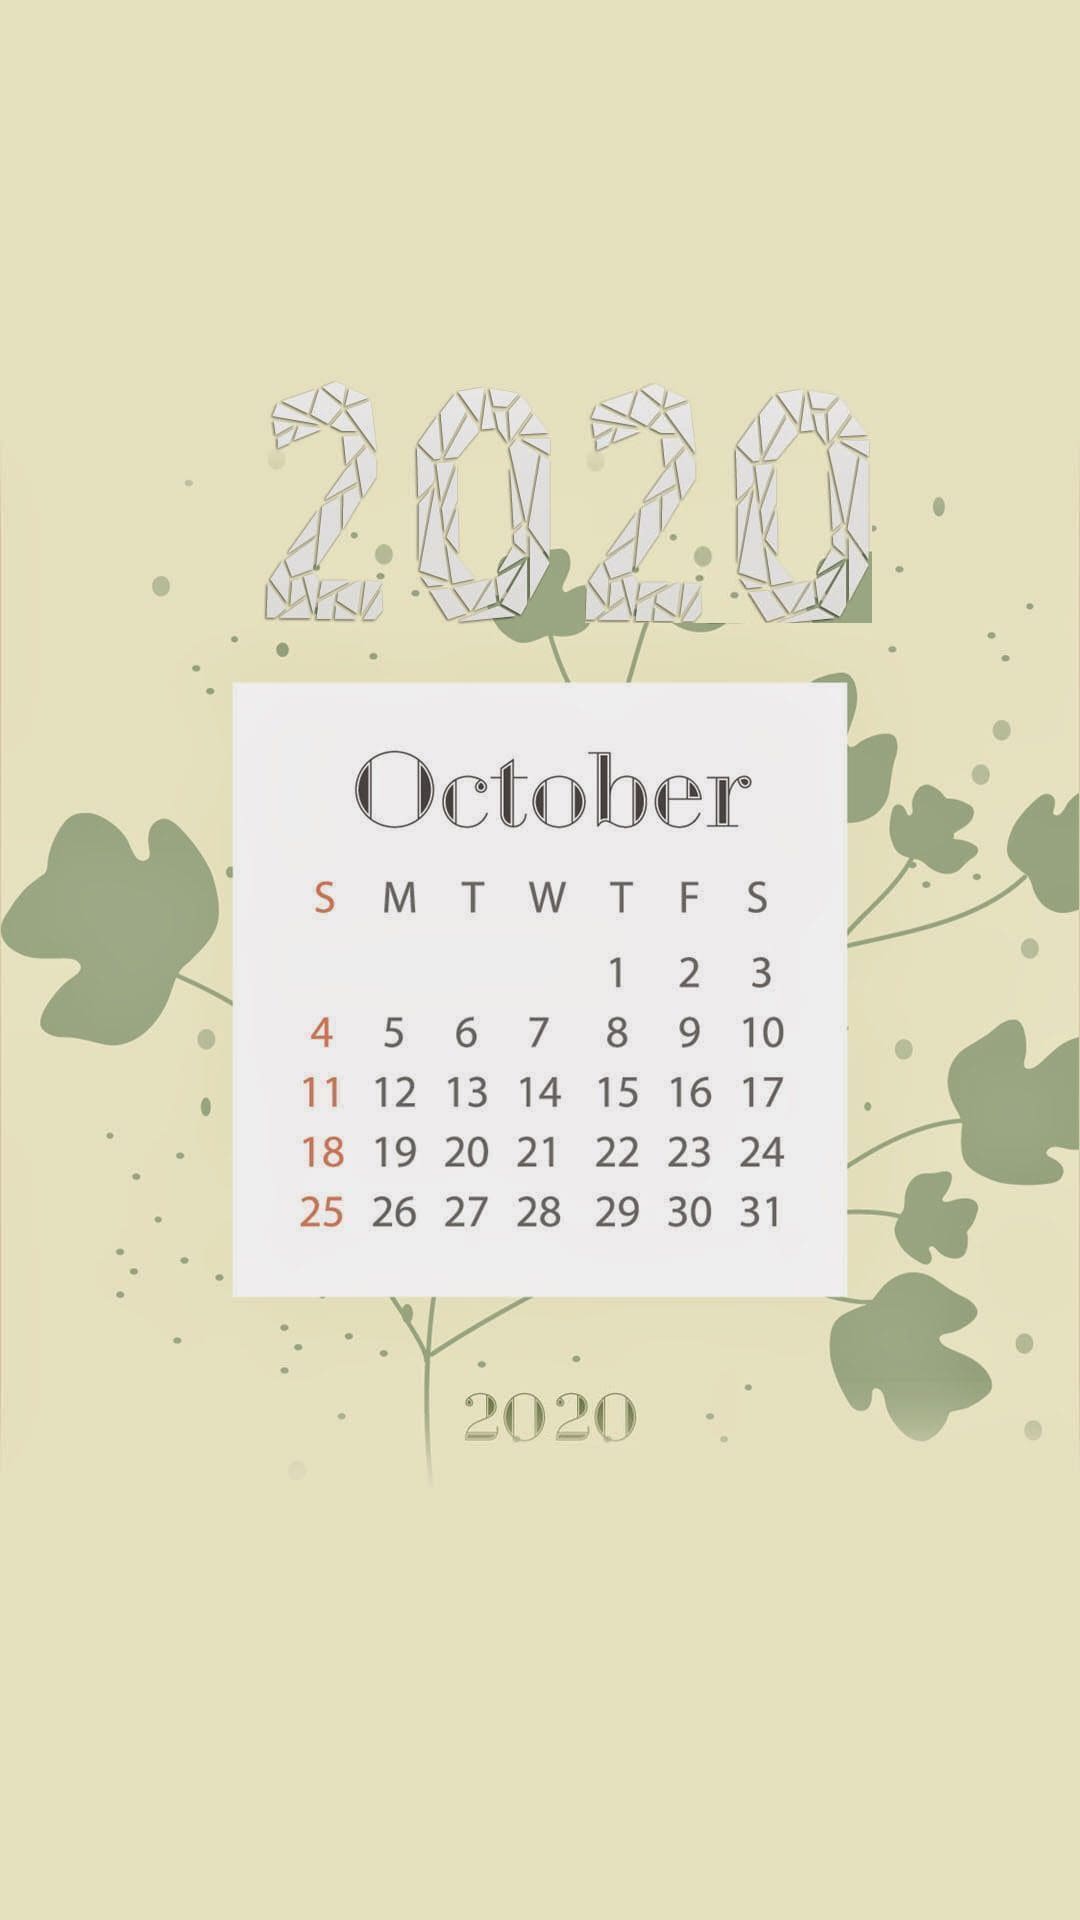 October Calendar Wallpaper Awesome HD